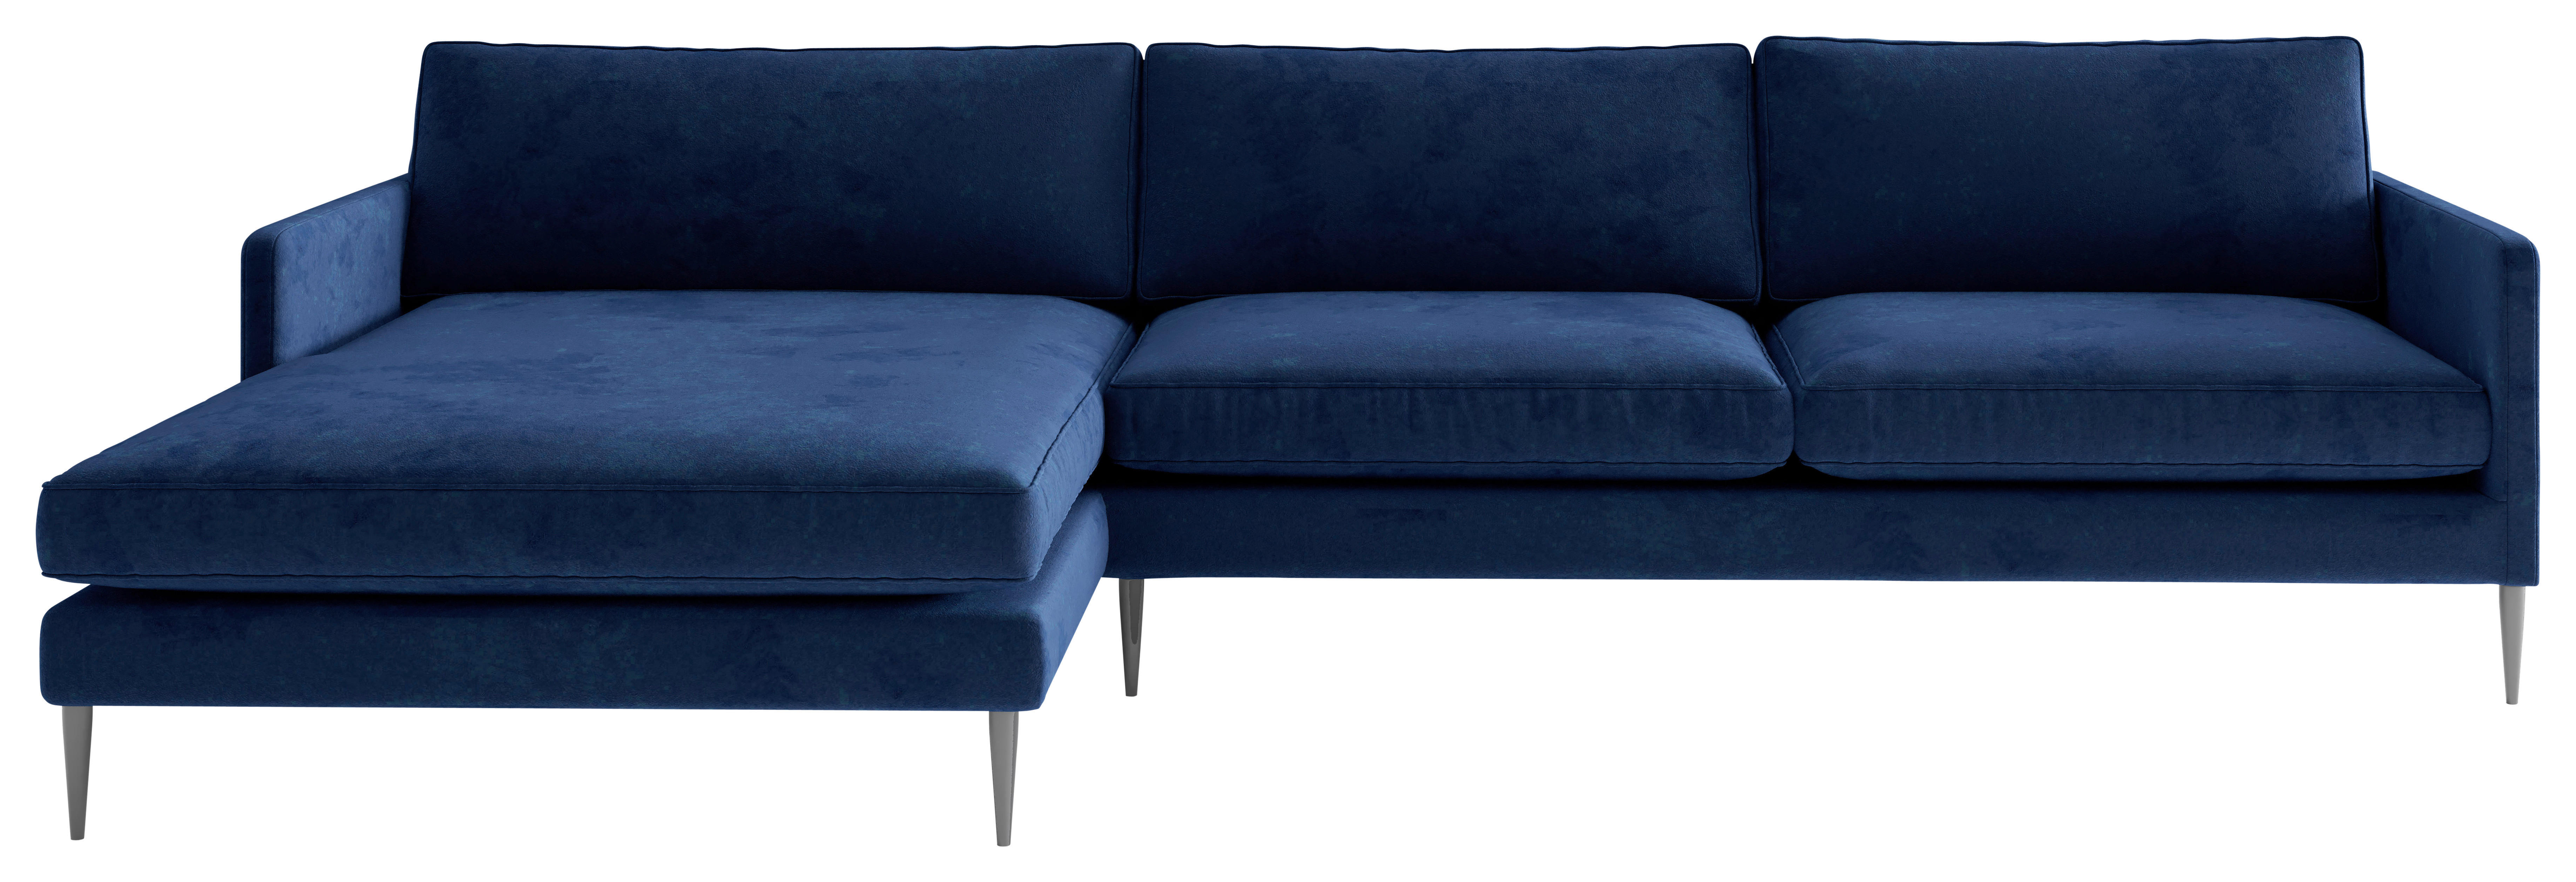 ECKSOFA Blau Samt, Velours  - Blau, Design, Textil/Metall (154/277cm) - Lomoco